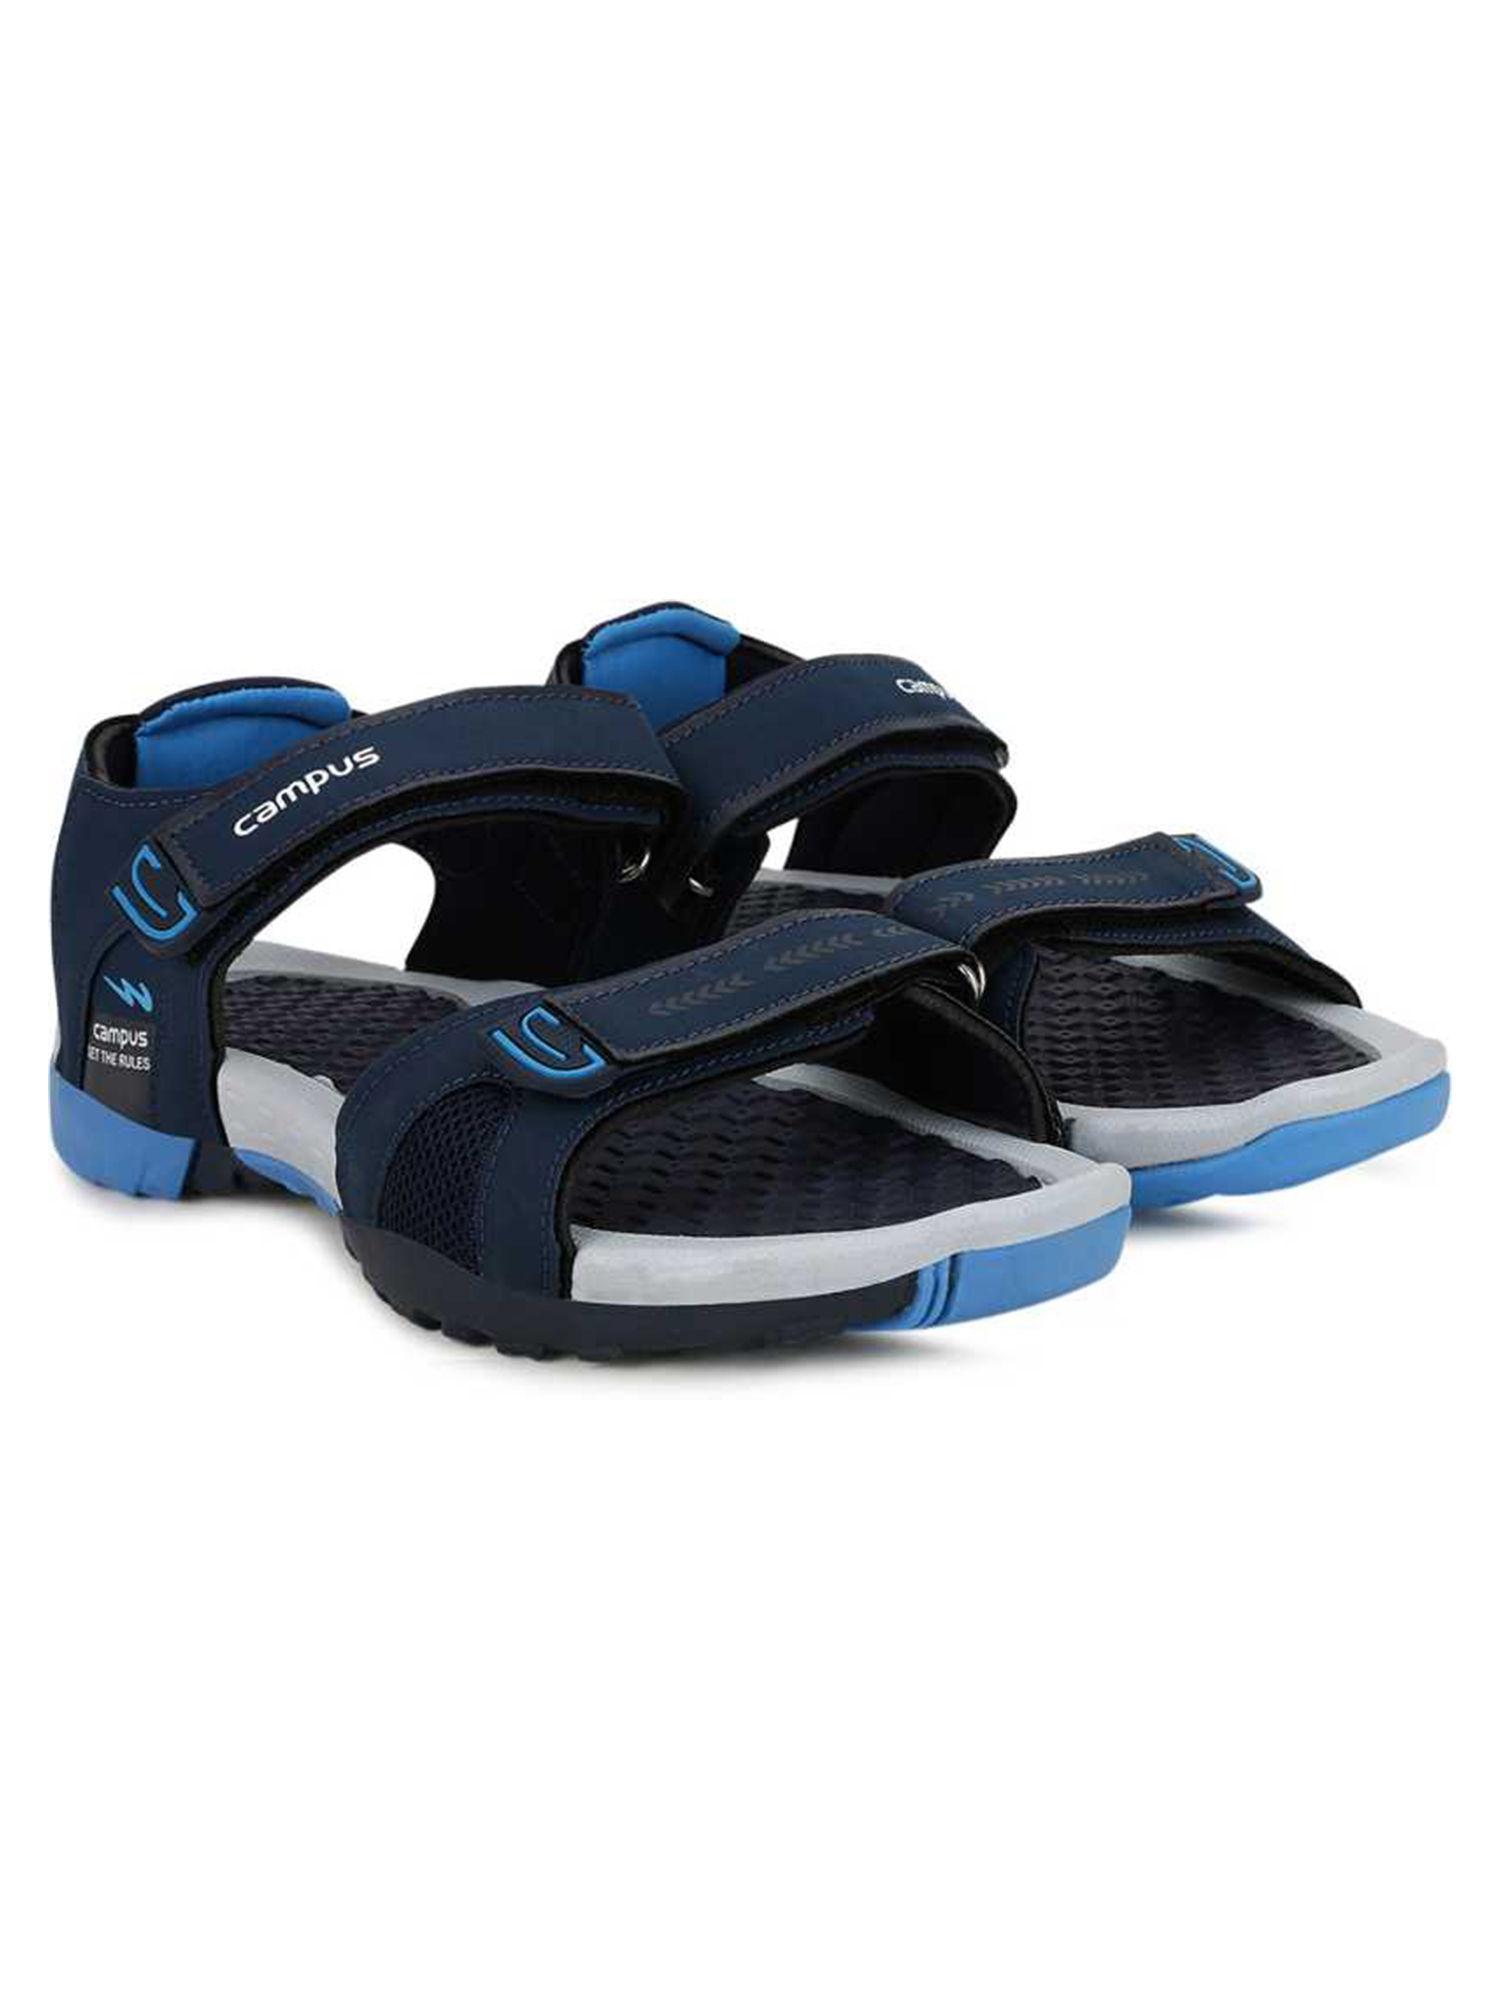 2GC-18 Navy Blue Sandals For Men